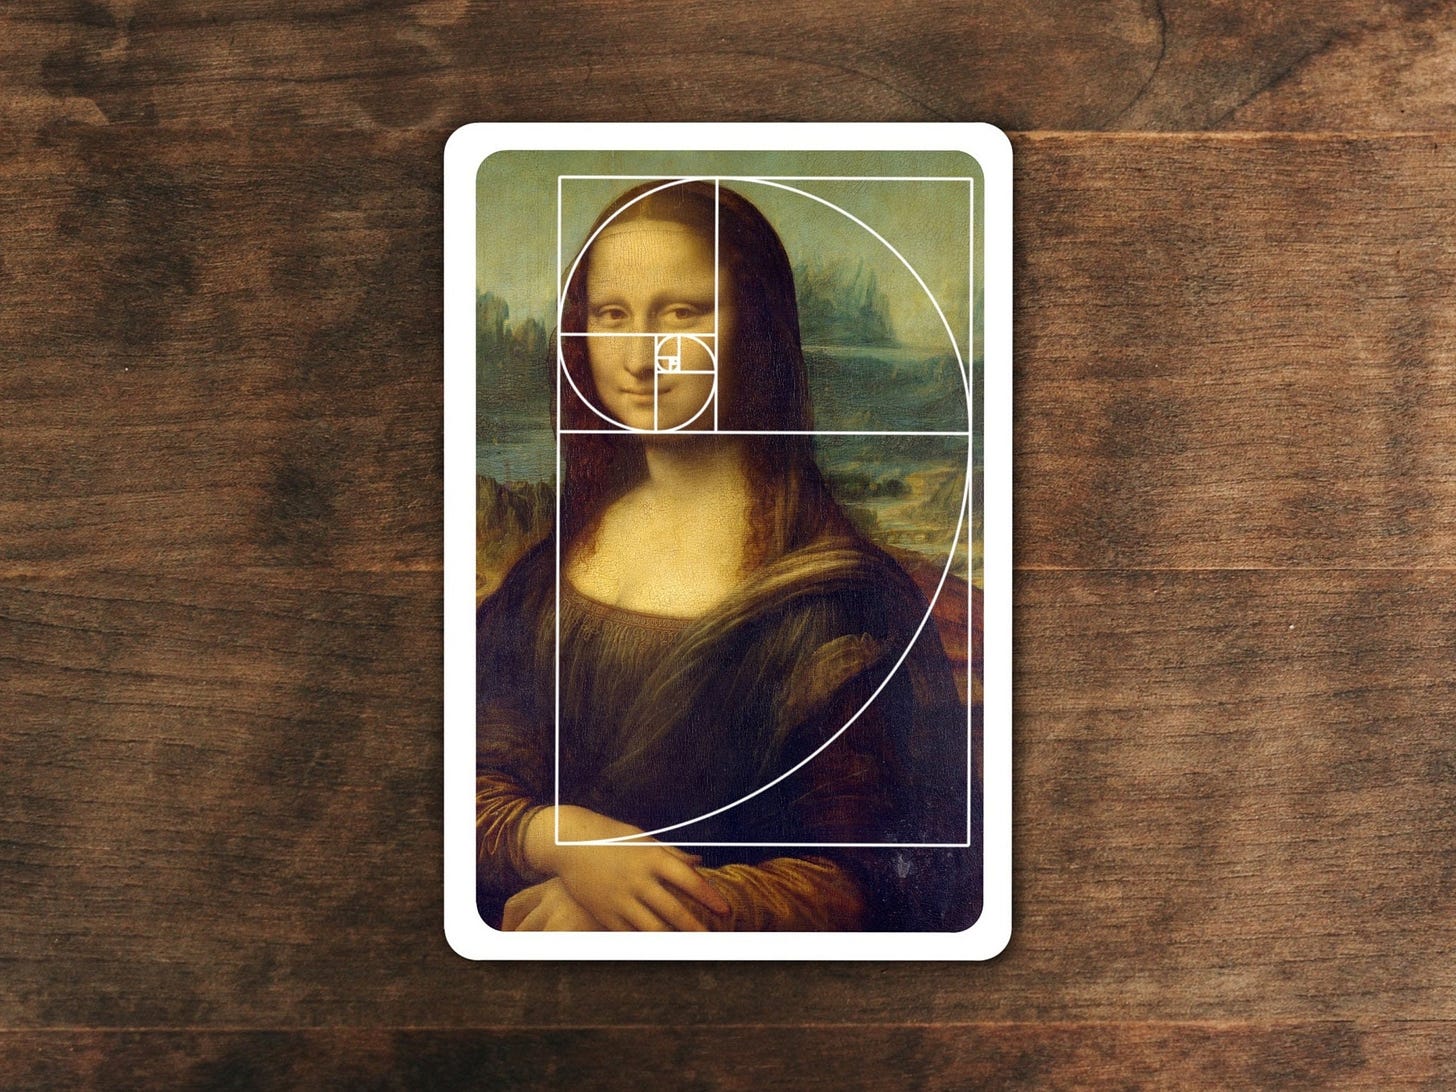 Mona Lisa Golden Ratio sticker | Fibonacci Spiral | Art sticker |